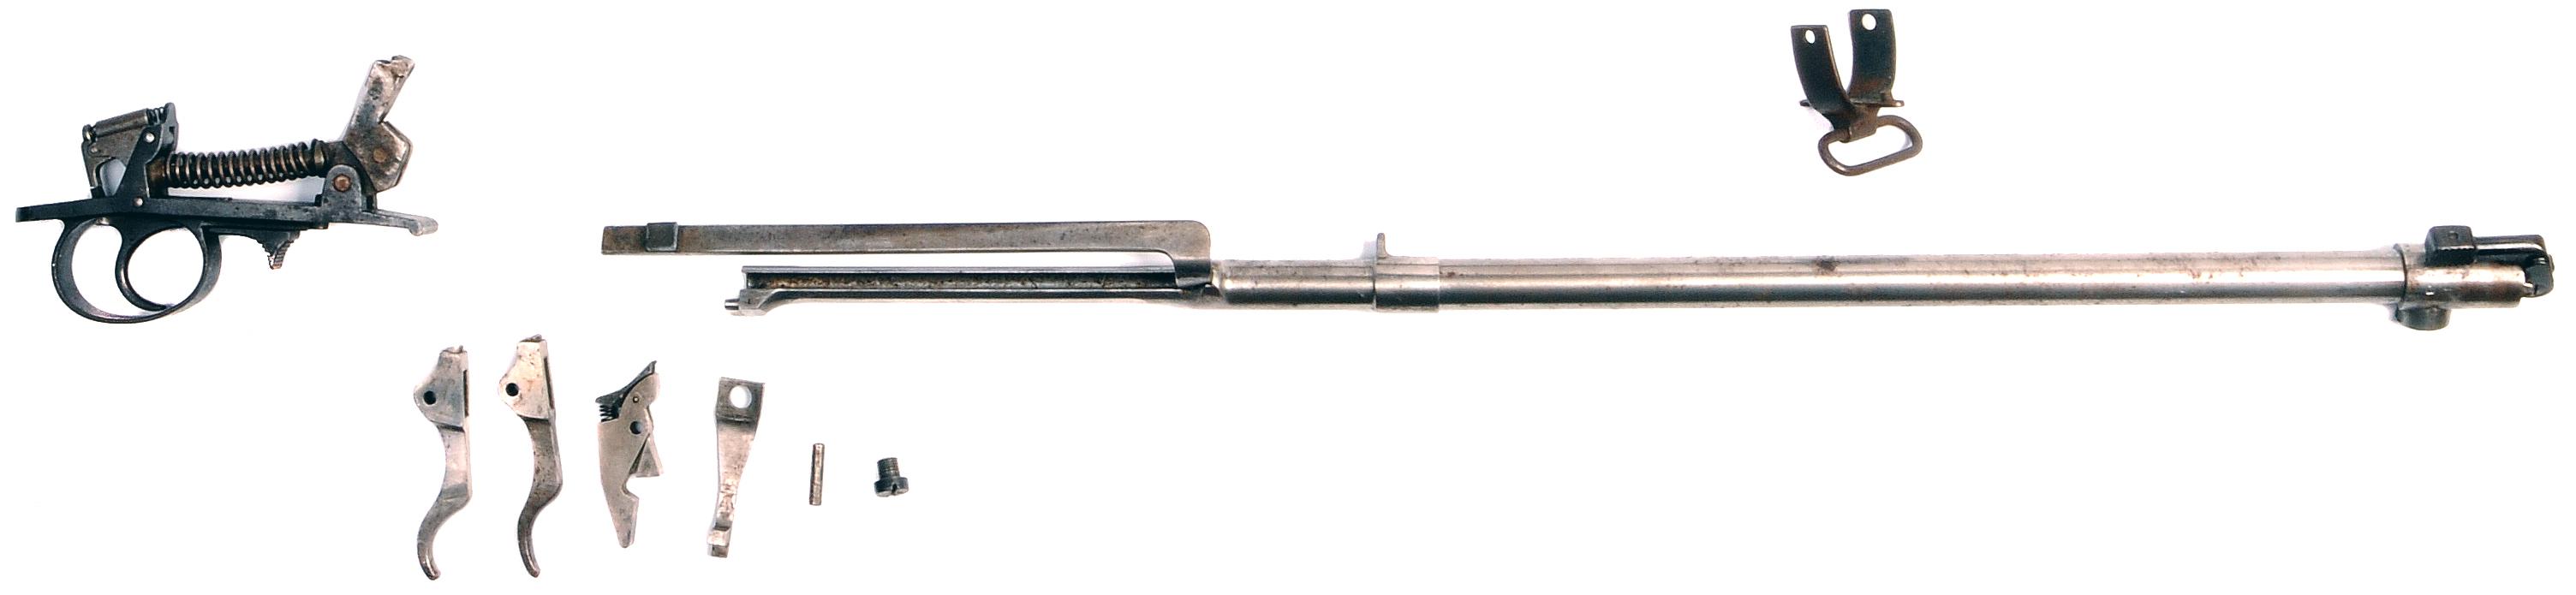 SUPER-Scarce Mexican Model 1908 Mondragon 7x57mm Semi-Automatic Rifle - FFL #474 (ENV 1)